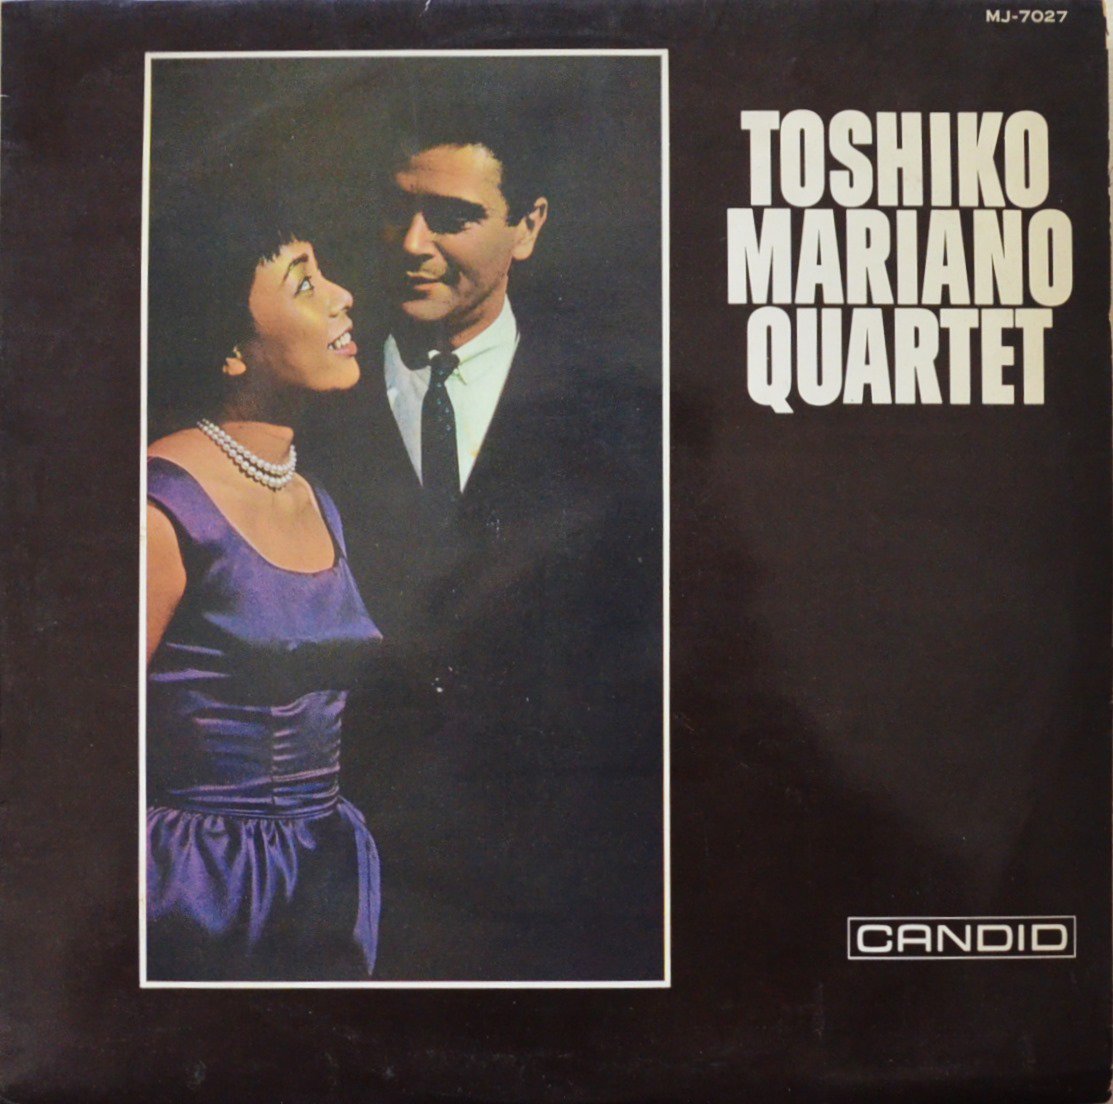 TOSHIKO MARIANO QUARTET (秋吉敏子,TOSHIKO AKIYOSHI,CHARLIE MARIANO) / トシコ・マリアーノ四重奏団 (LP)